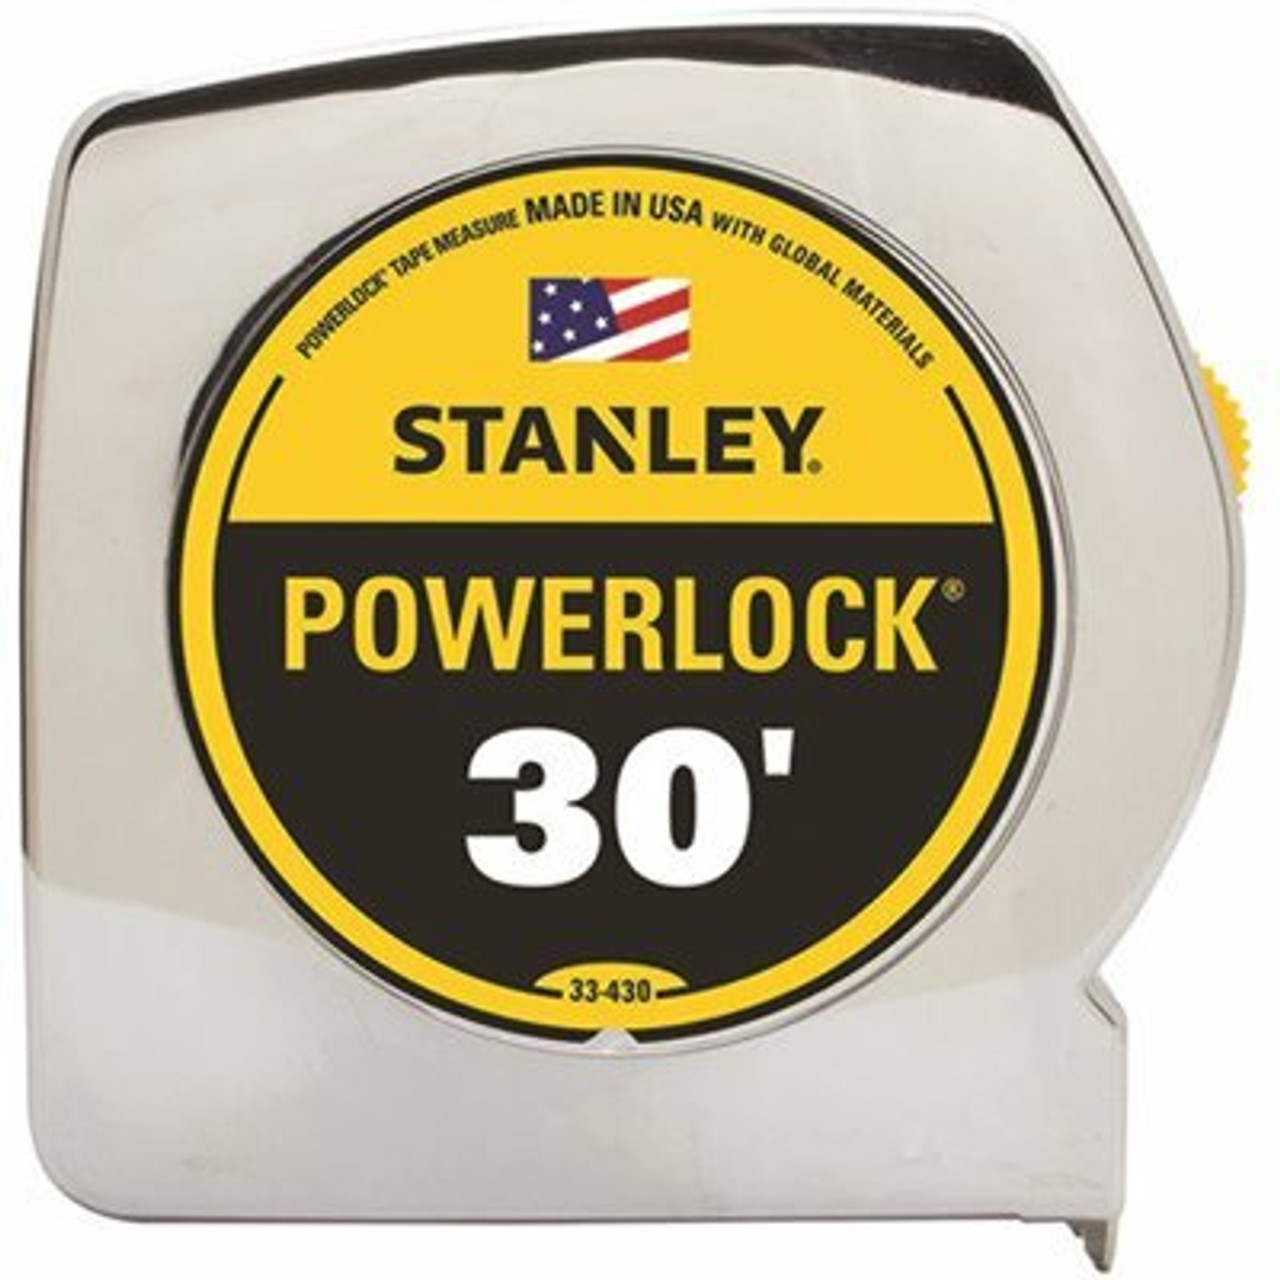 Stanley 30 Ft. Powerlock Tape Measure